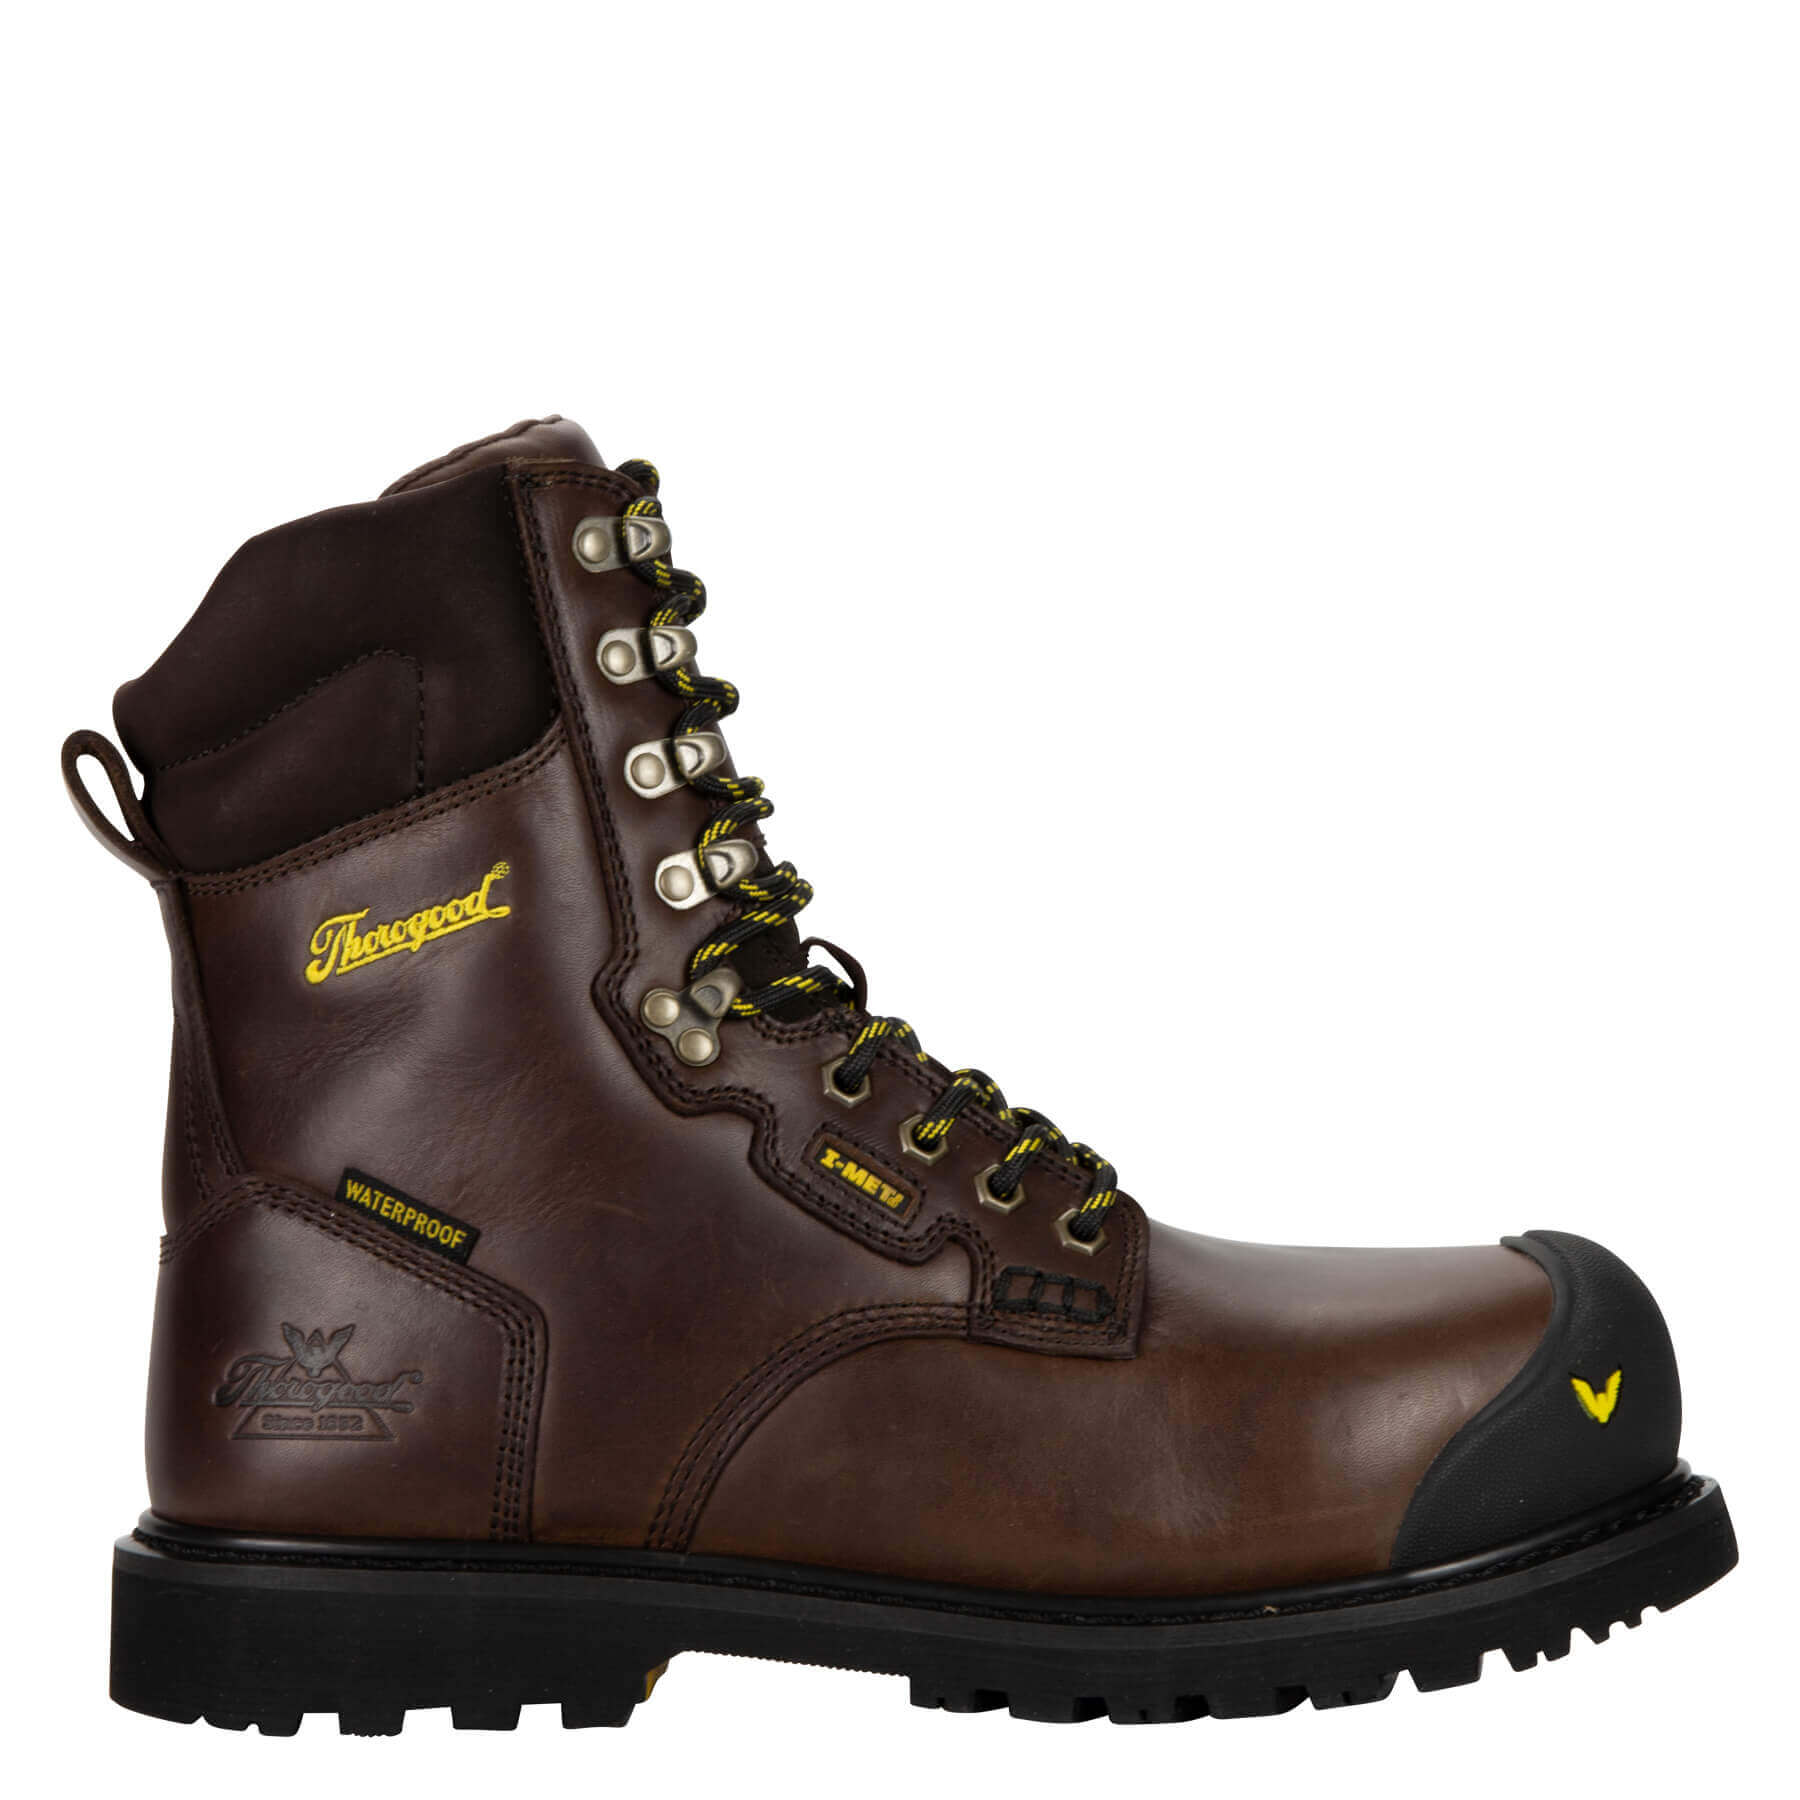 metatarsal safety boots